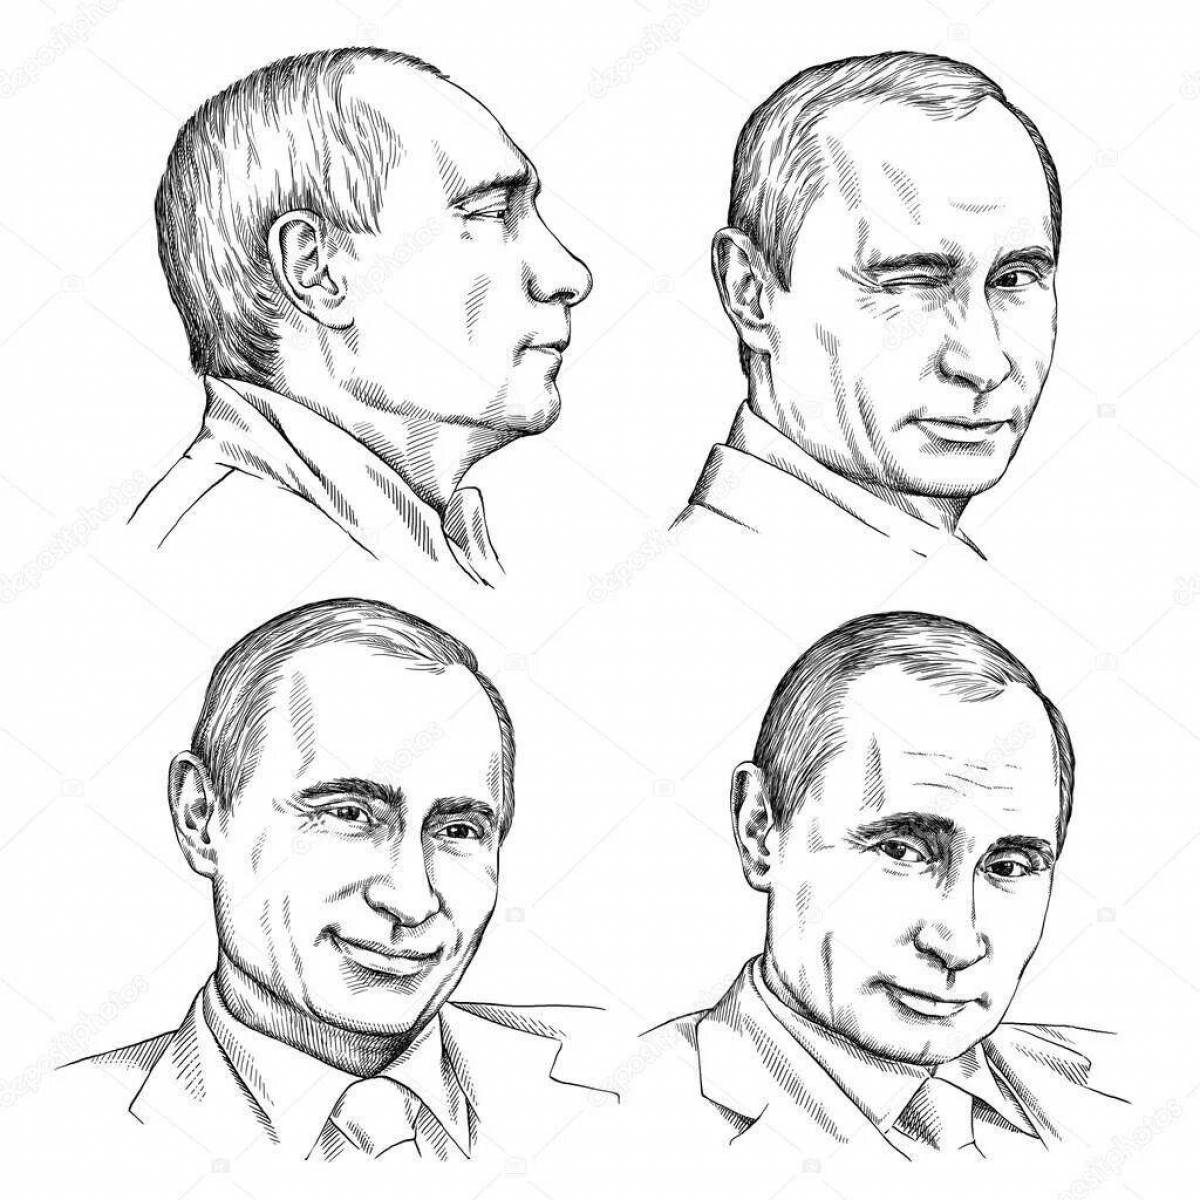 Putin fun coloring for kids